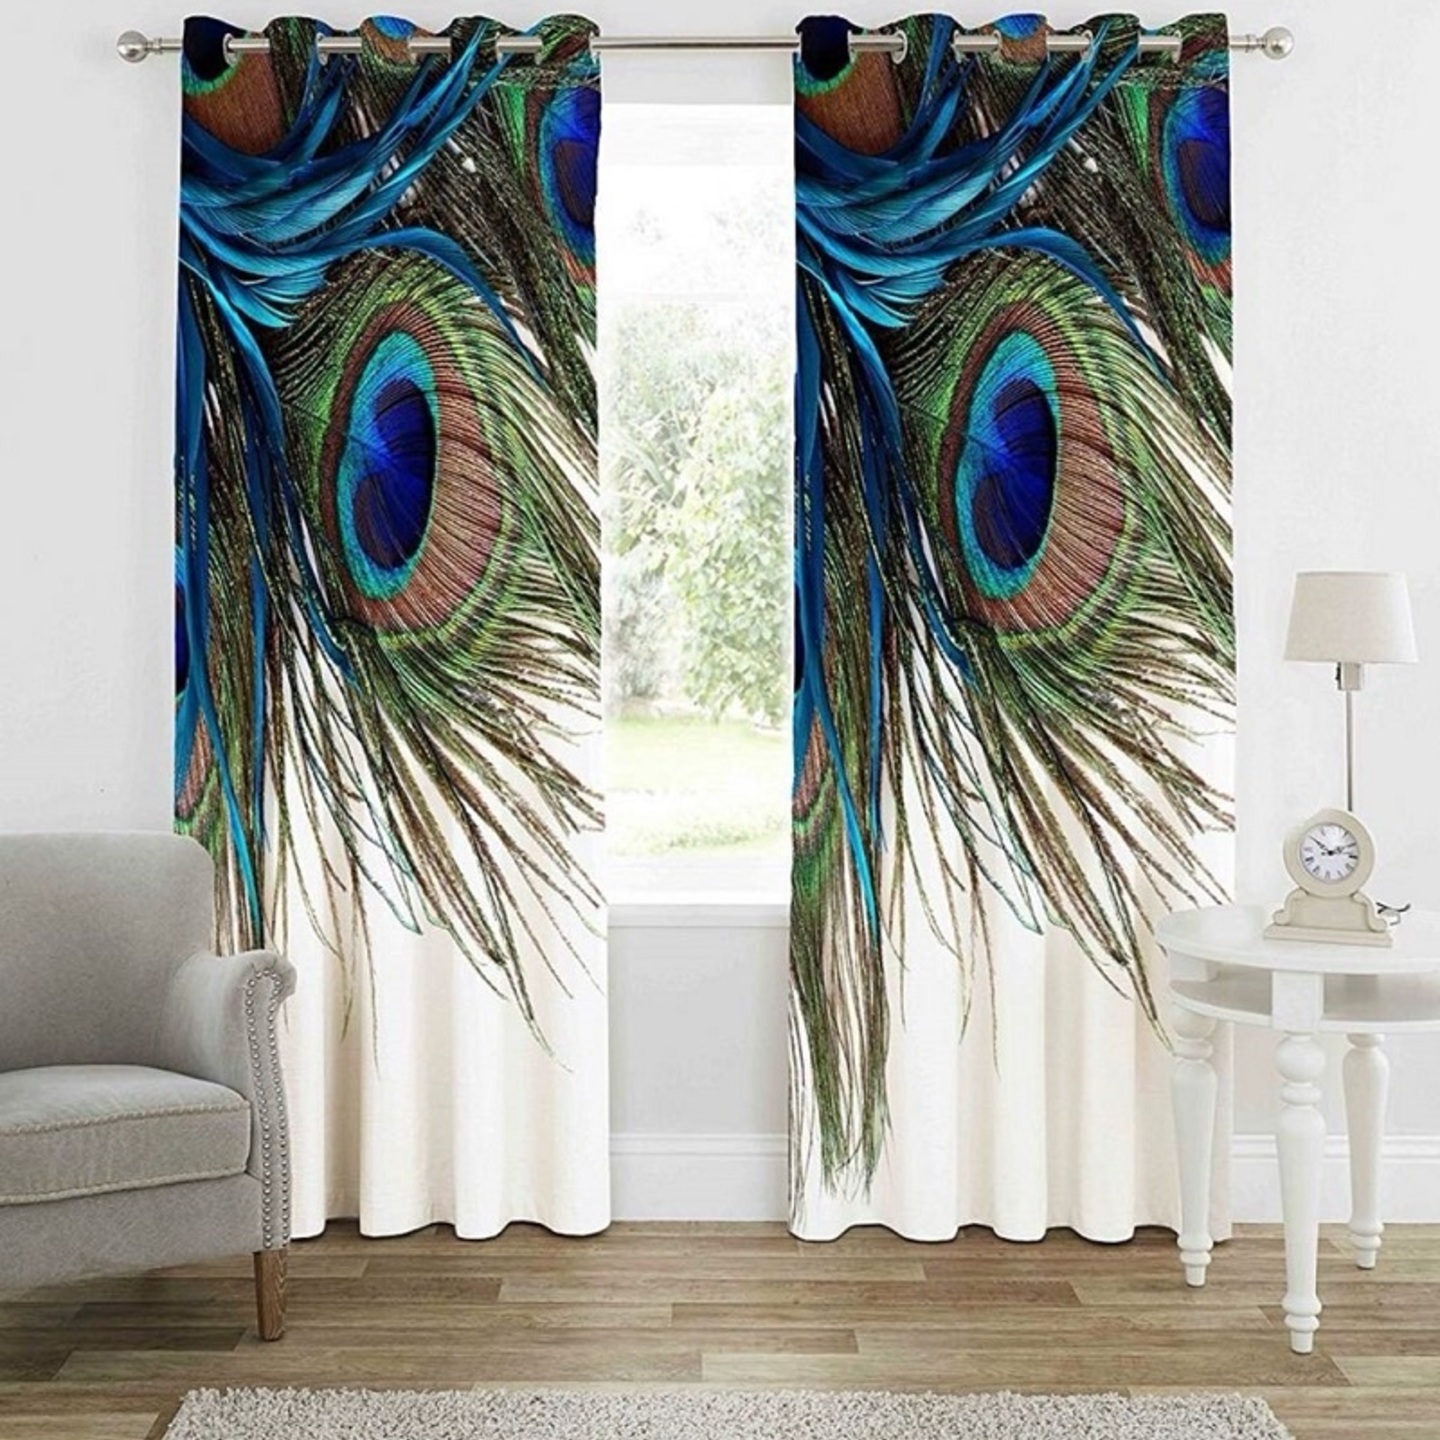 Handtex Home Polyester Digital Print Eyelet Curtain Long Door 4 x 9 Feet, Mor Pankh_Pack of 2